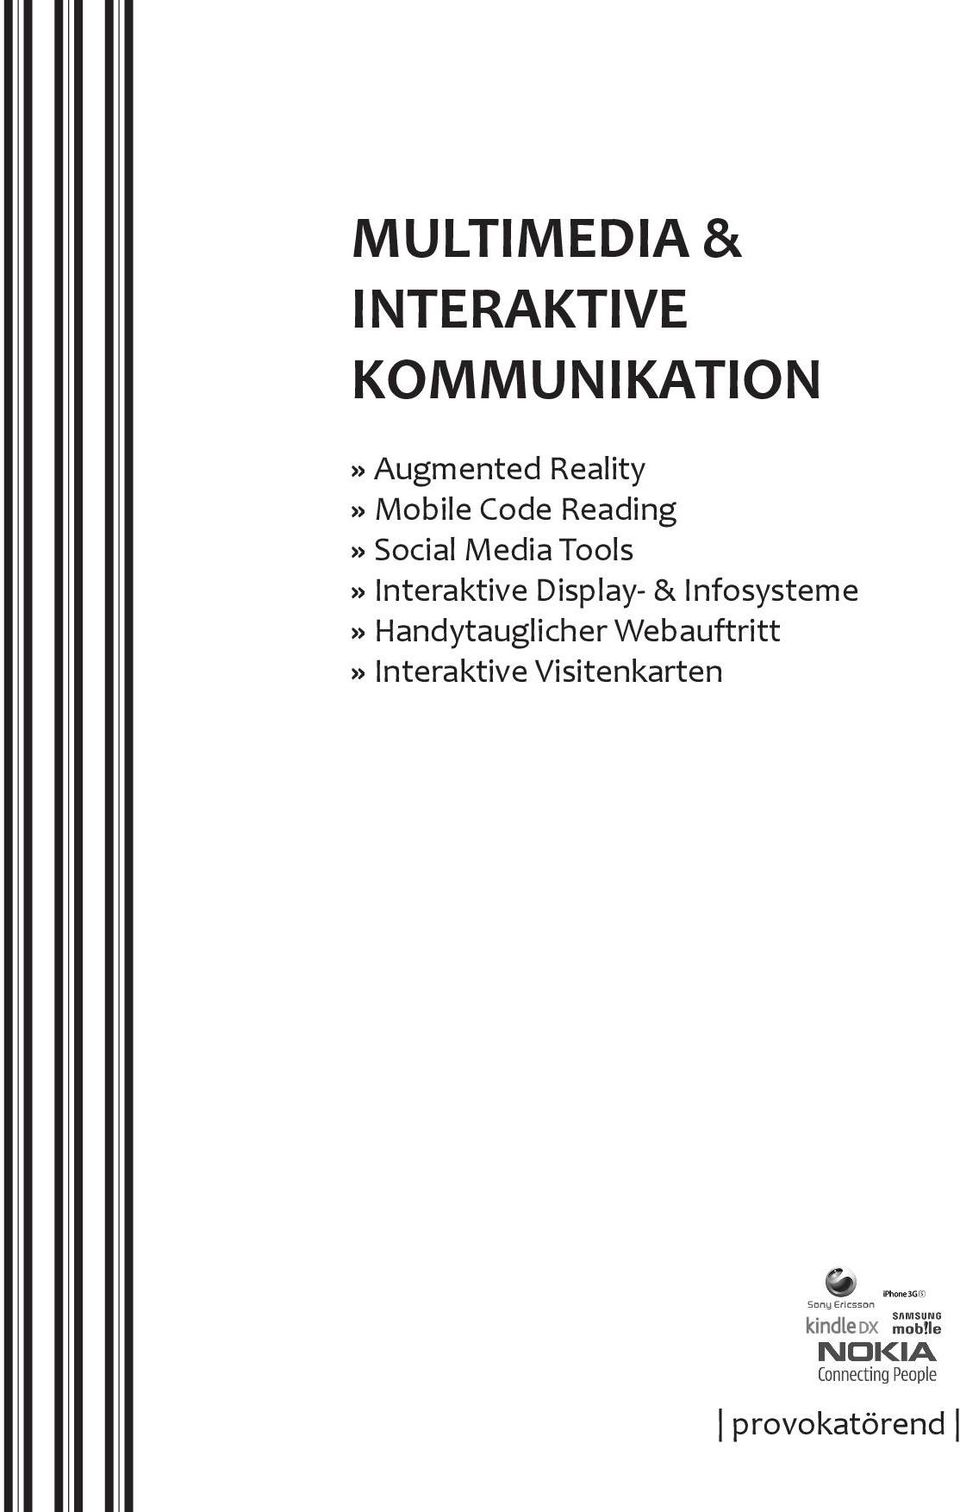 Interaktive Display- & Infosysteme»